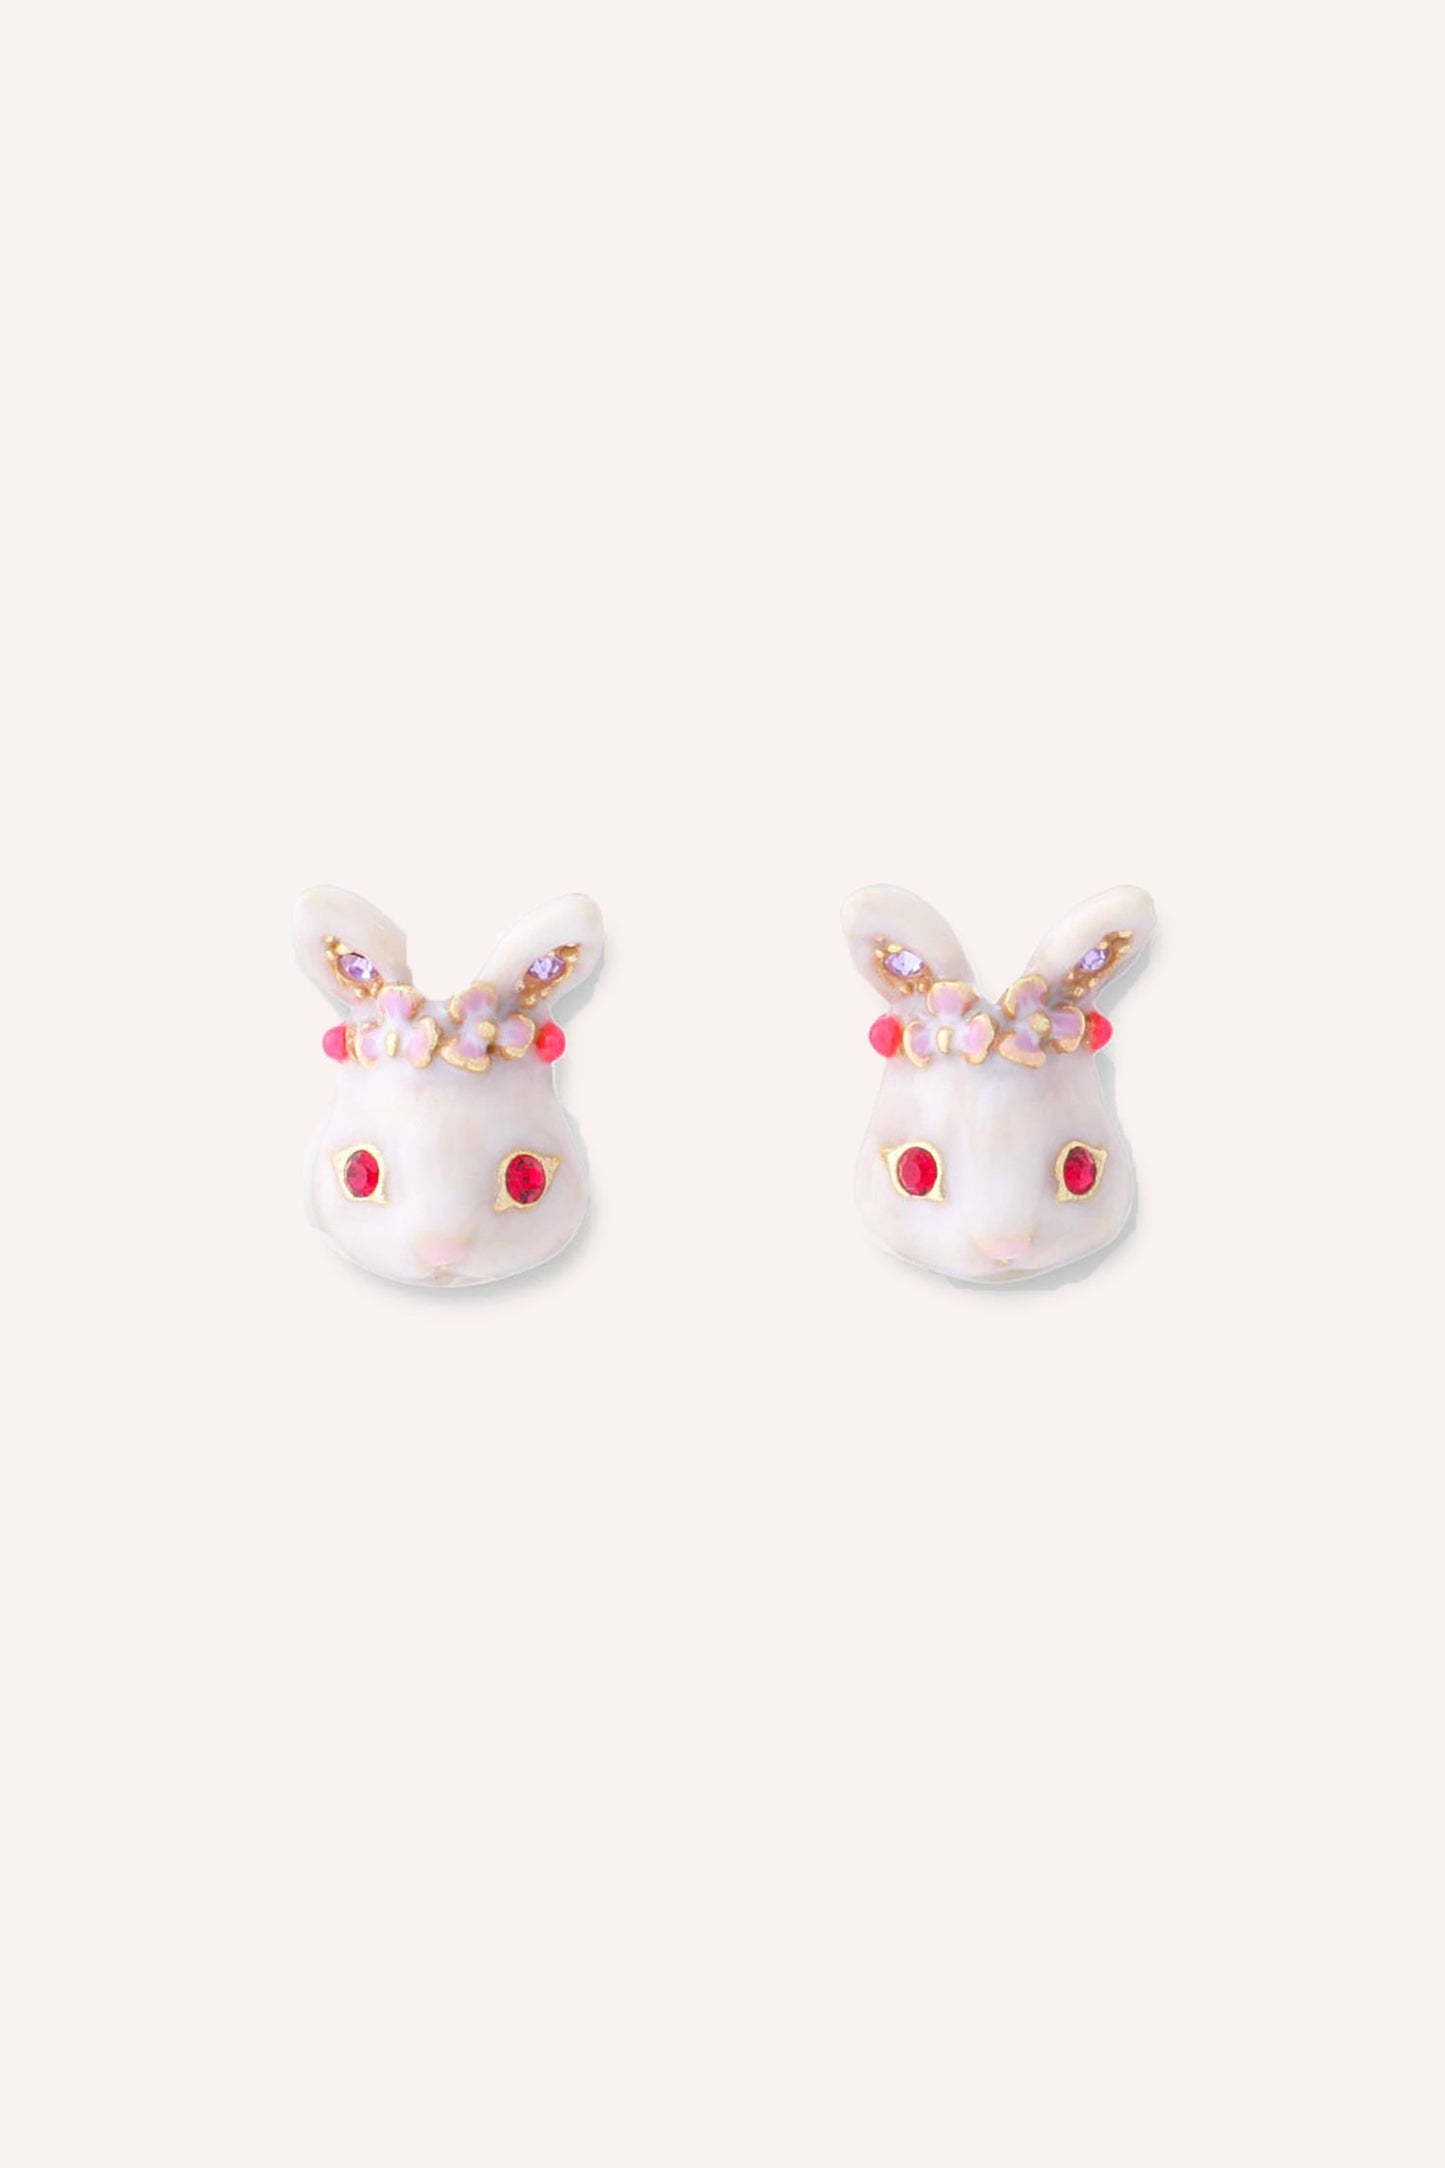 Rabbit Stud Earrings, white enamel rabbit charm with red eye gems, purple ear gems, and red crown.